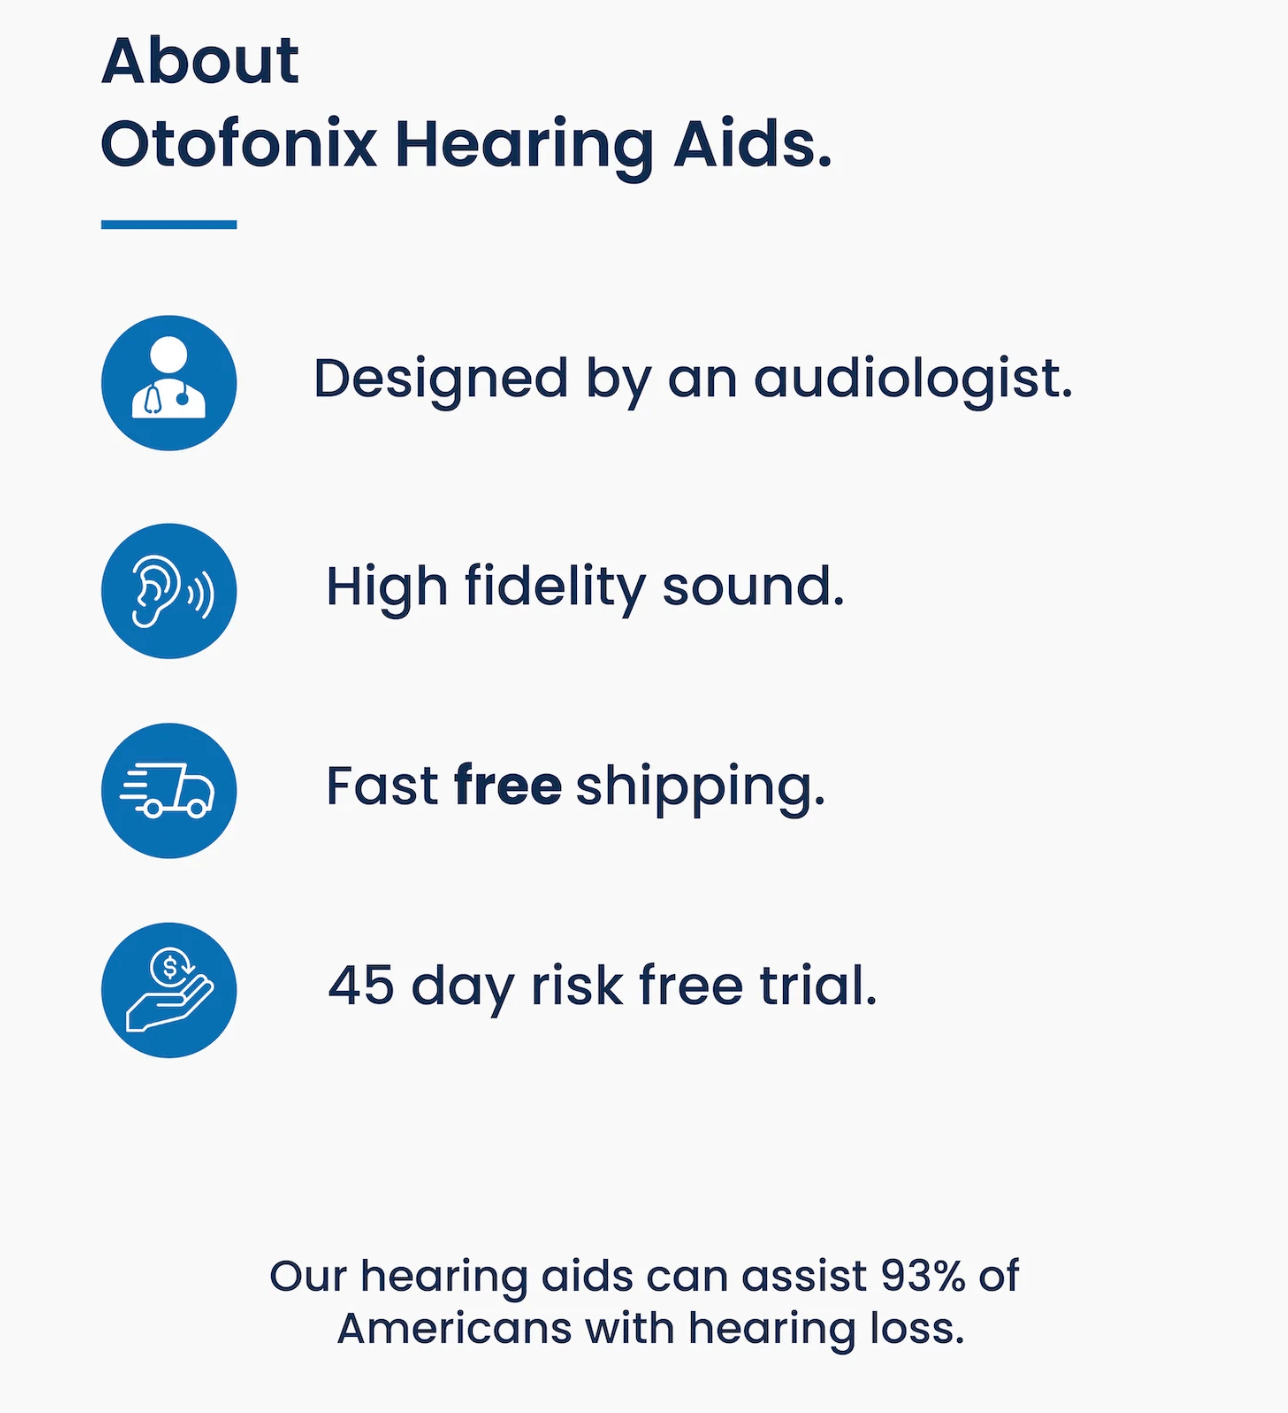 About Otofonix Hearing Aids